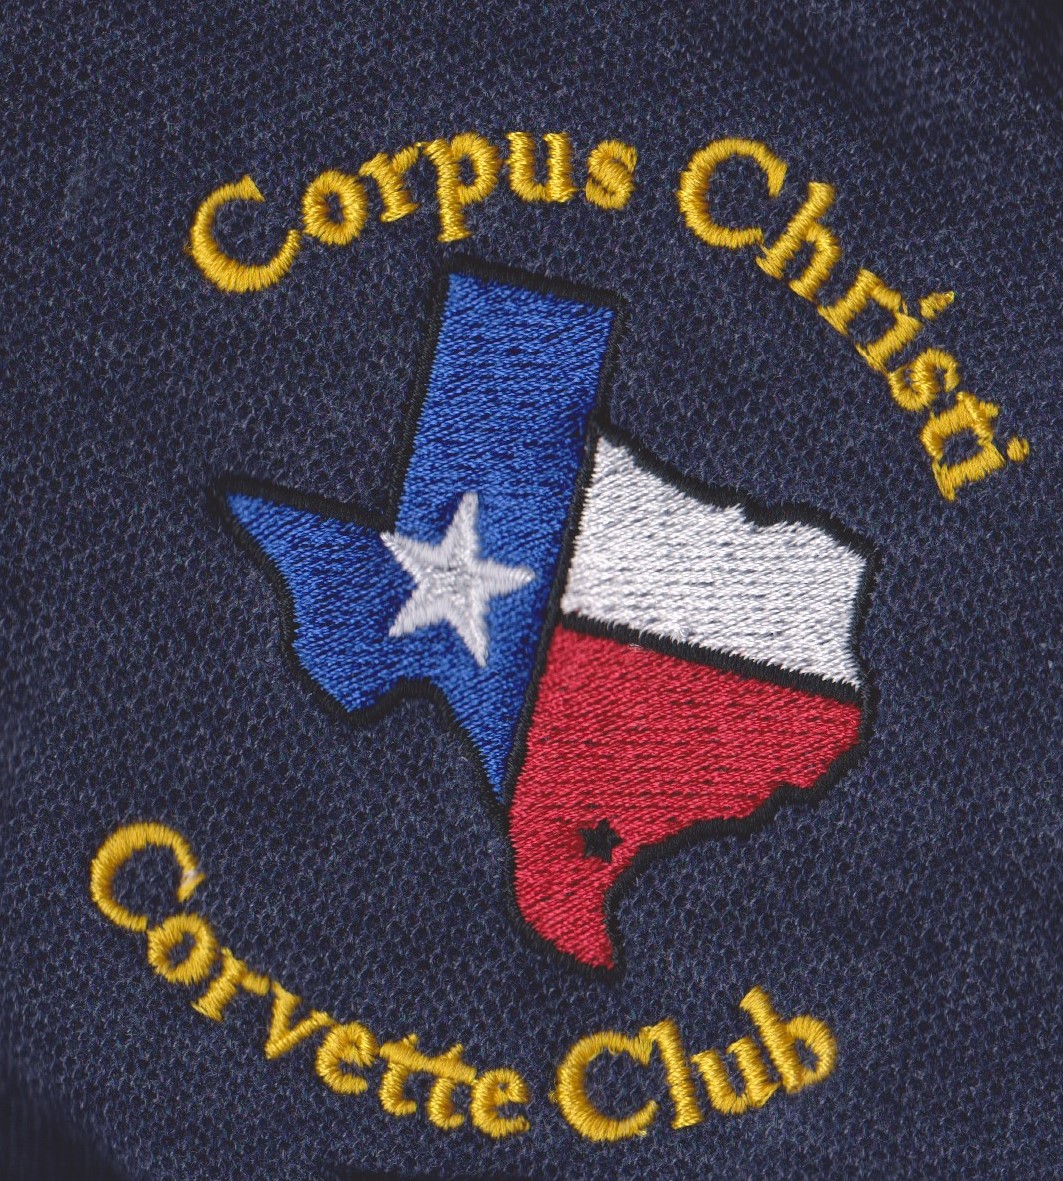 Corpus Christi Corvette Club Honor Our Veterans Car And Truck Show Car Show Radar 9626